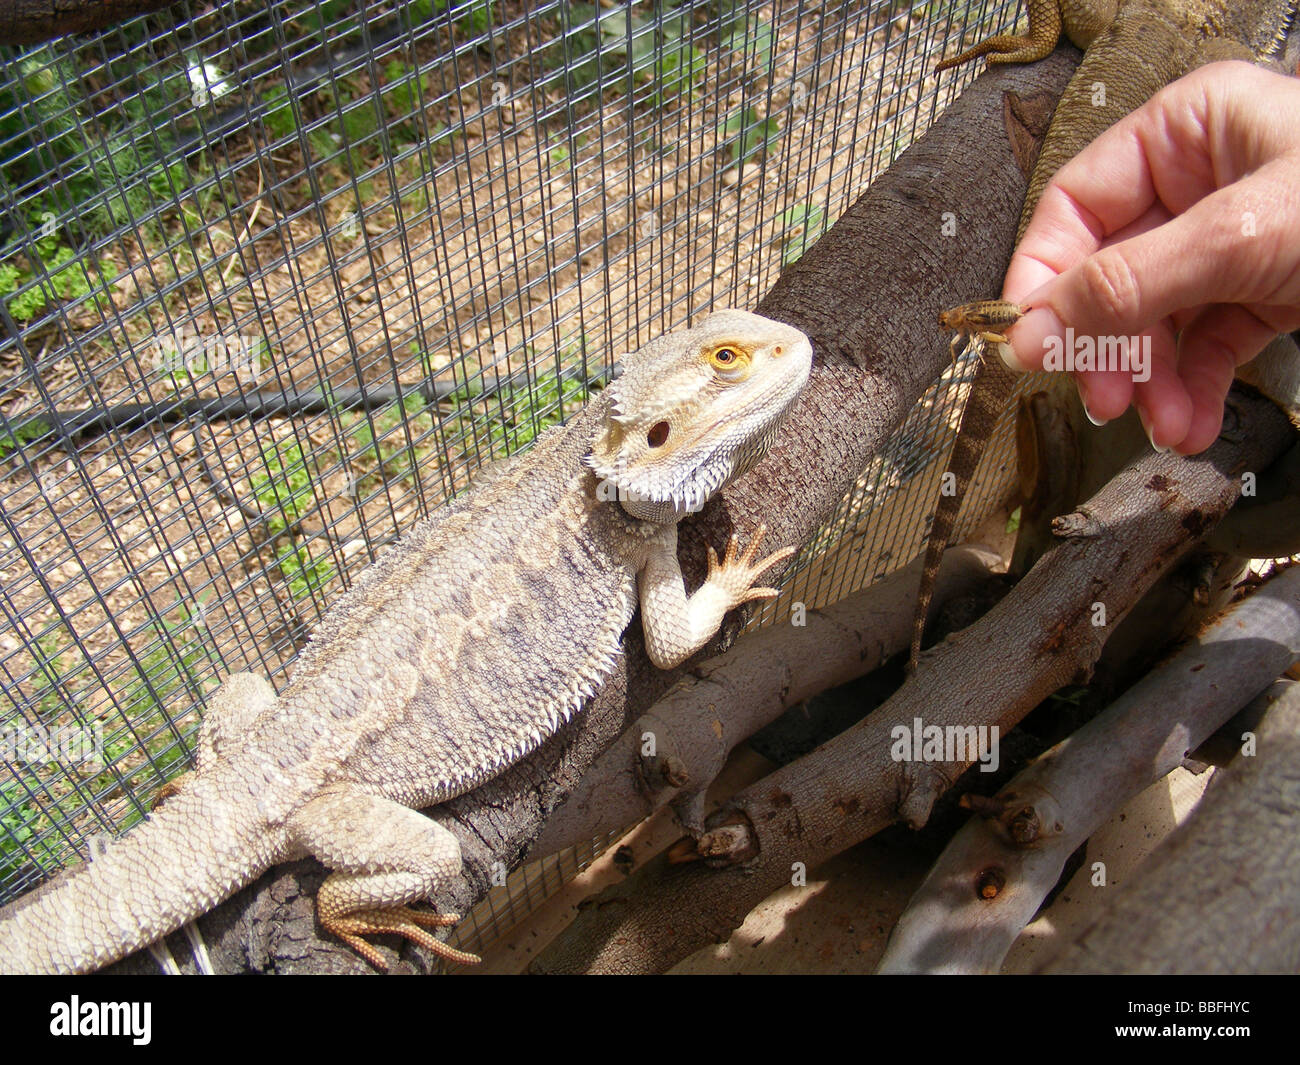 hand feeding a cricket to a young Bearded Dragon in captivity Stock Photo